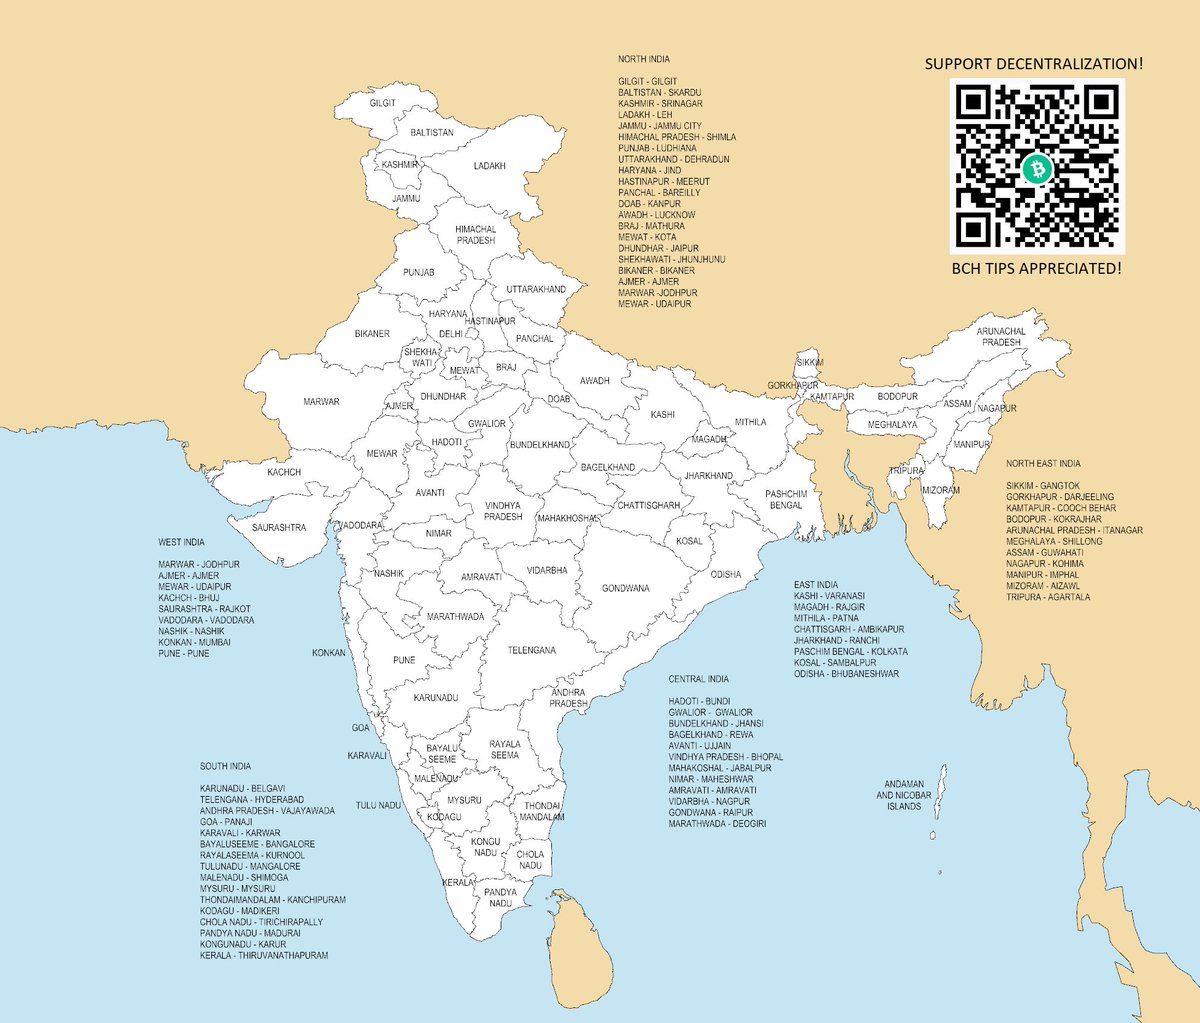 According to Gautam desiraju's book  'Bharat:India 2.0 ' India must be divided into 75 states